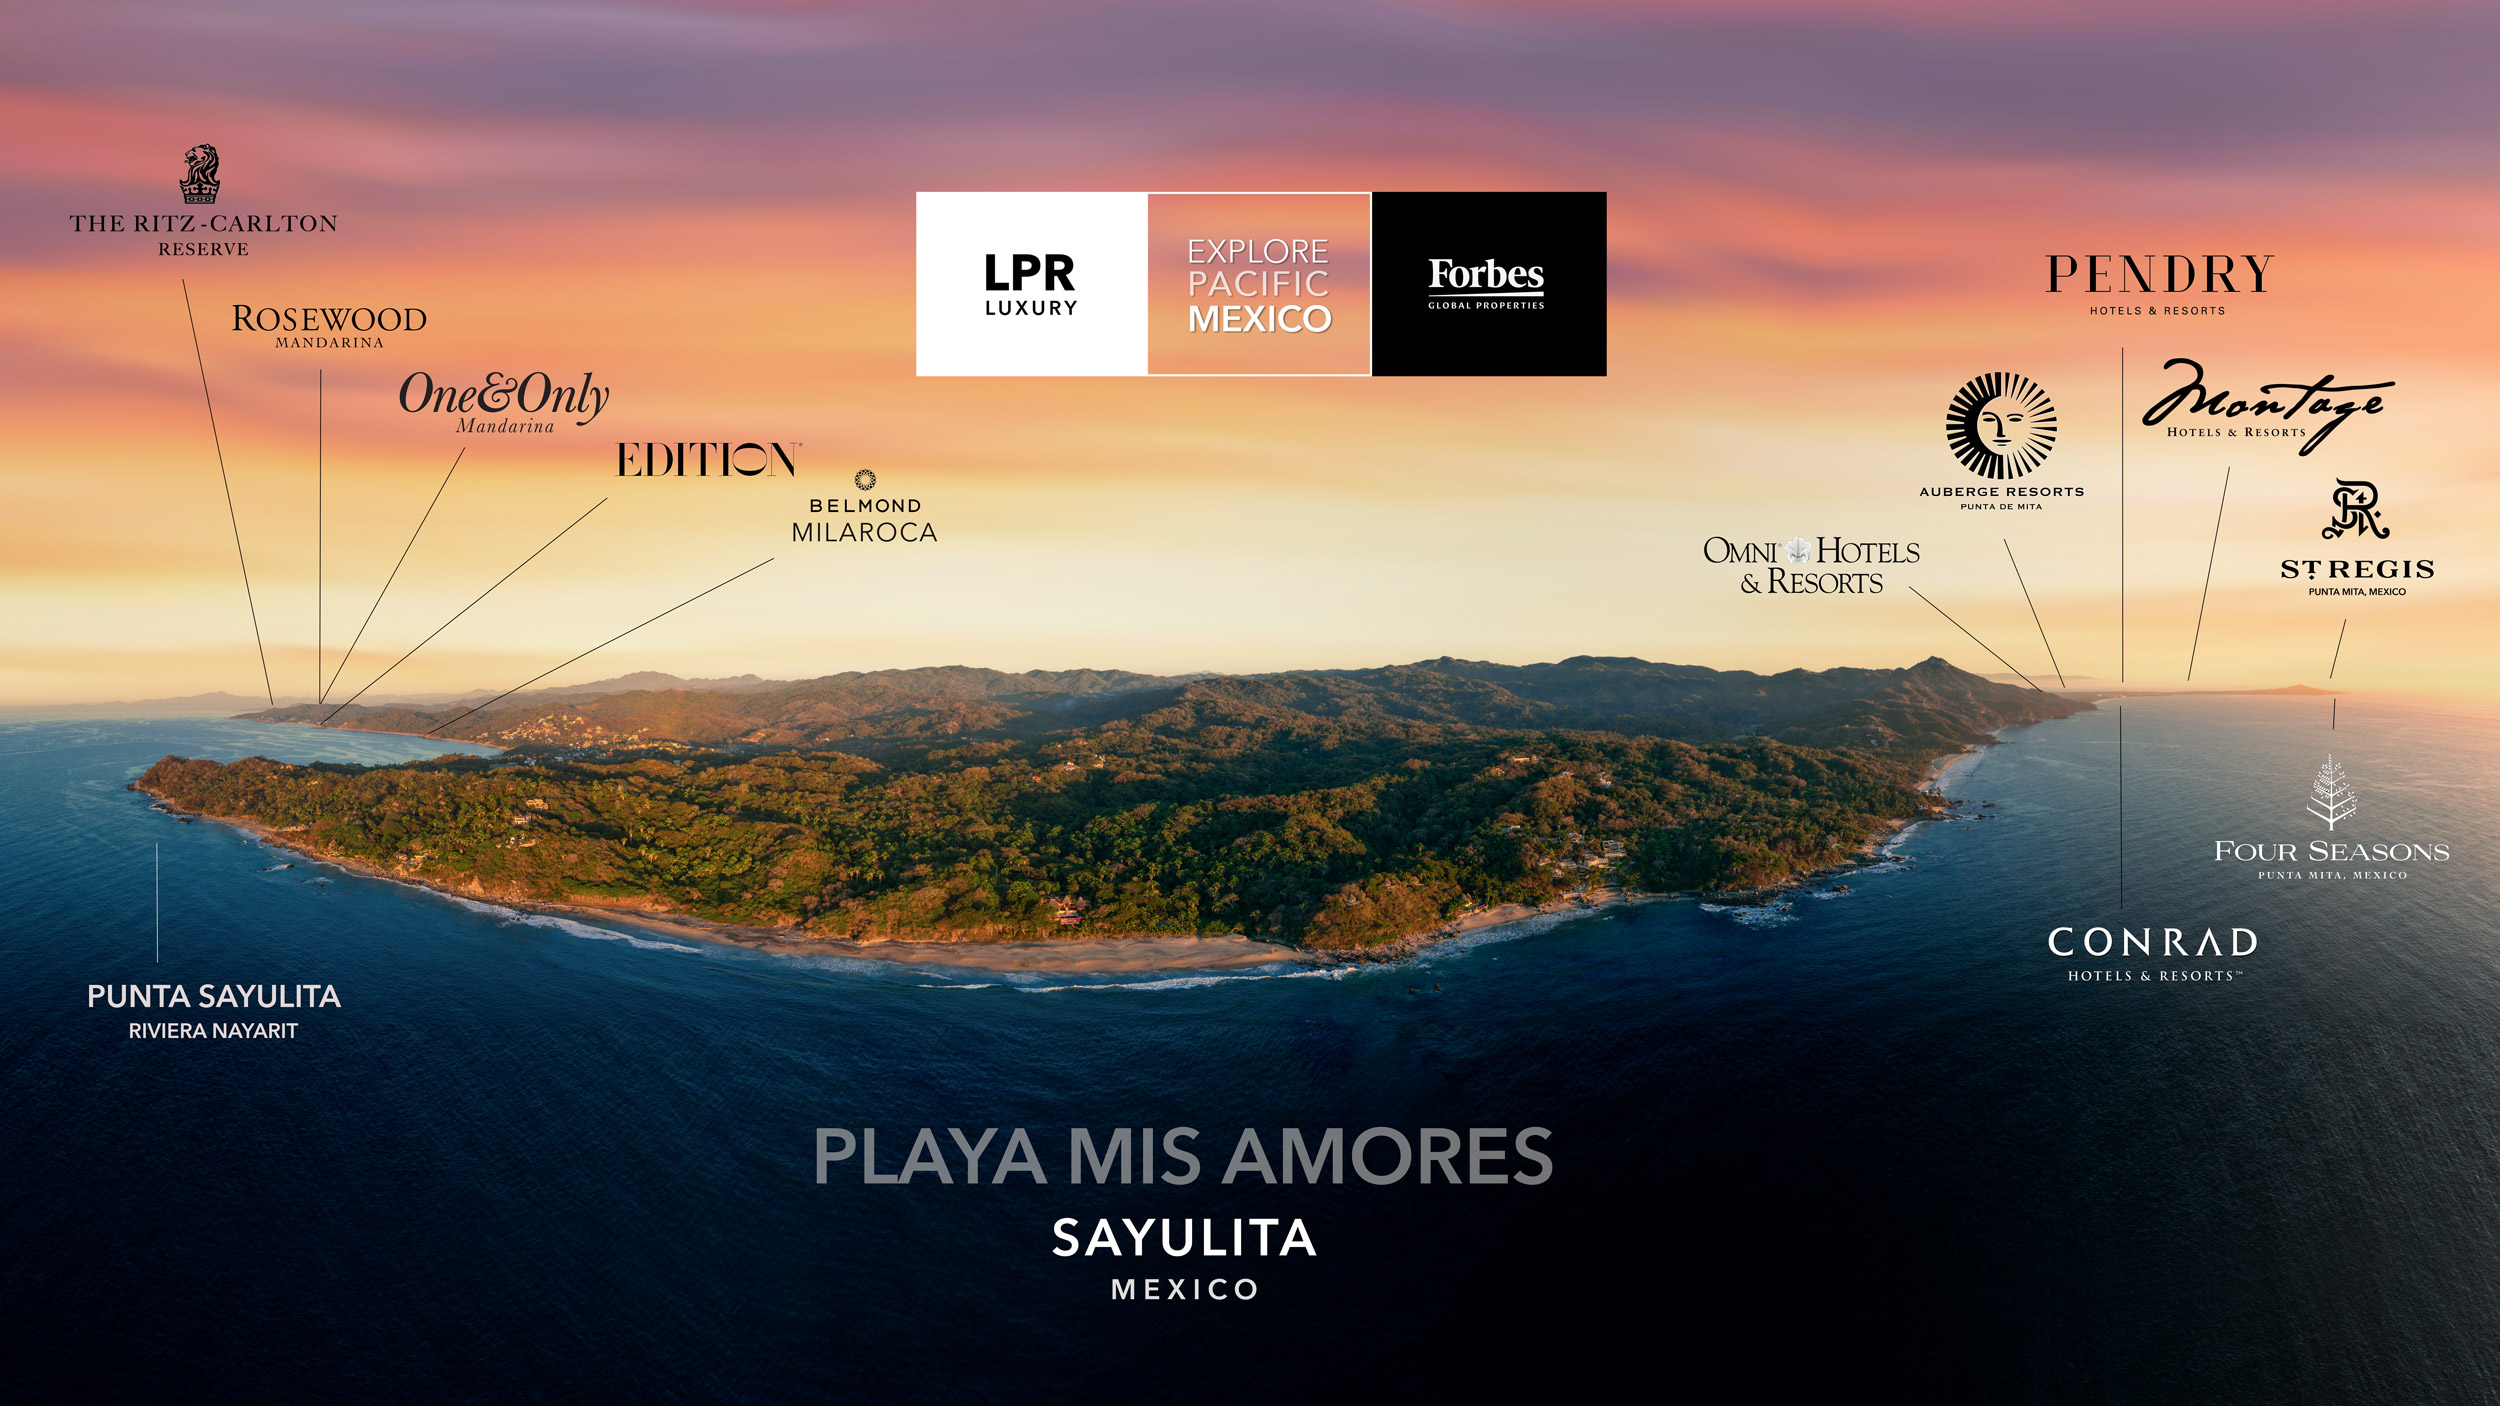 Playa Mis Amores - Hotel development site just South of Sayulita, Riviera Nayarit, Mexico